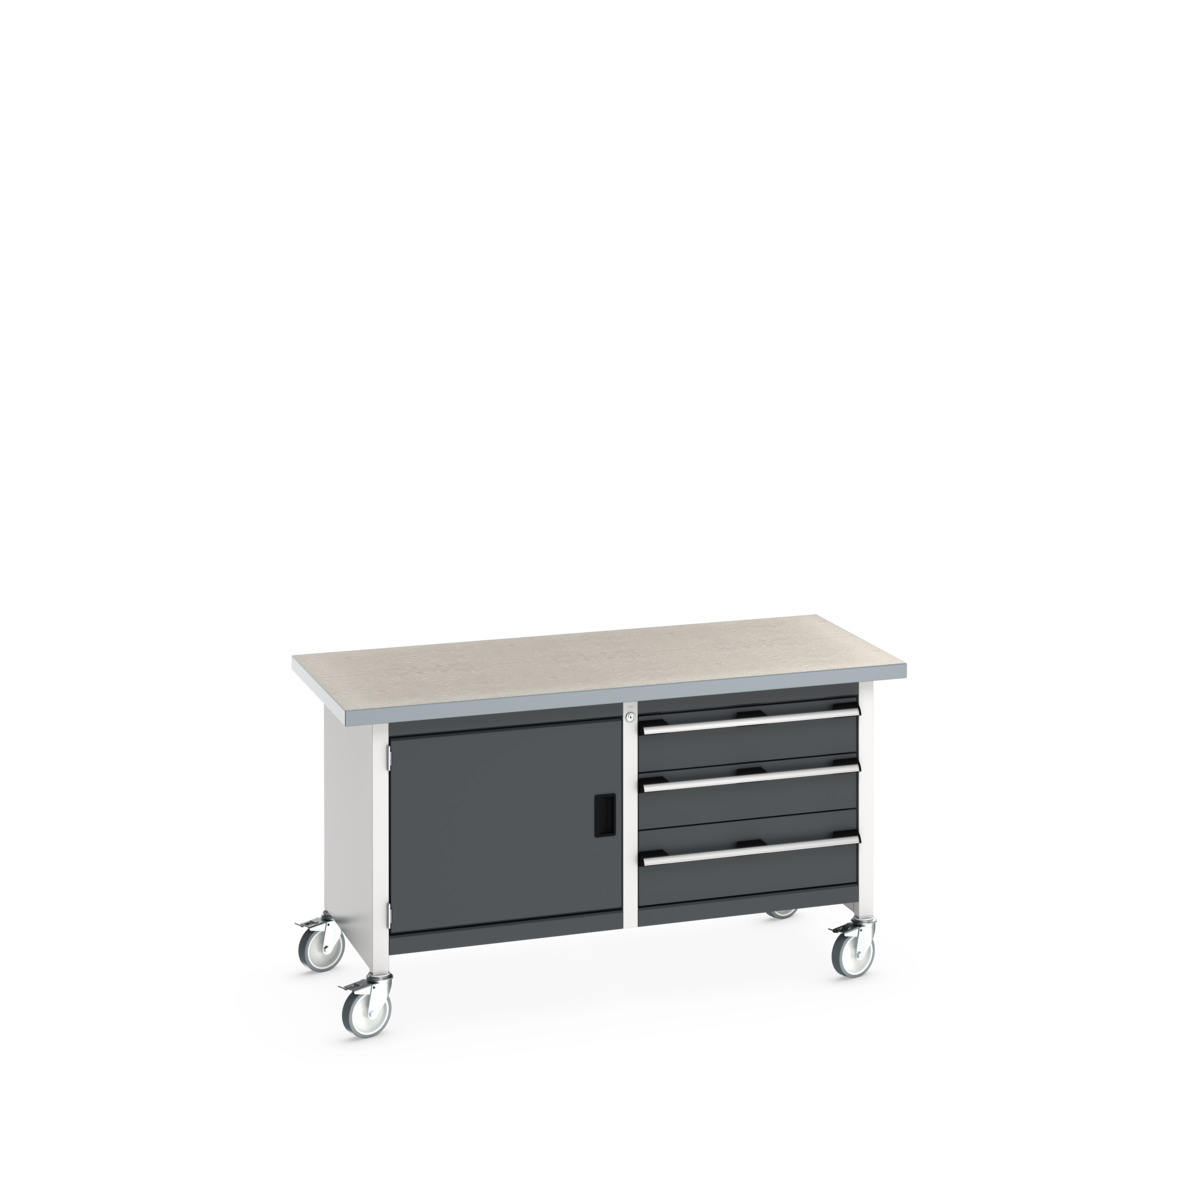 41002102. - cubio mobile storage bench (lino)